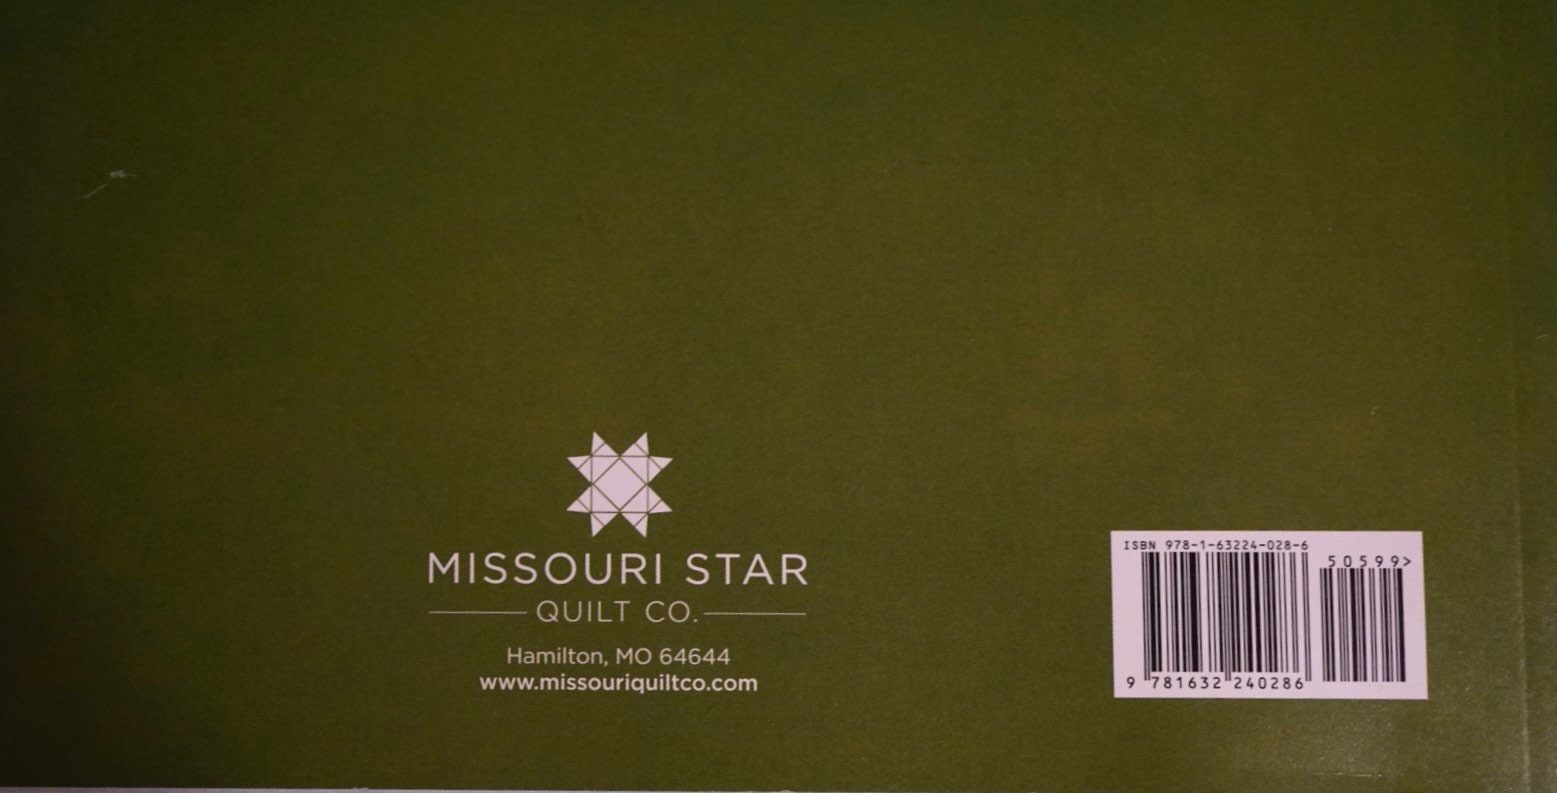 Missouri Star Quilt Co - Hamilton, MO 64644